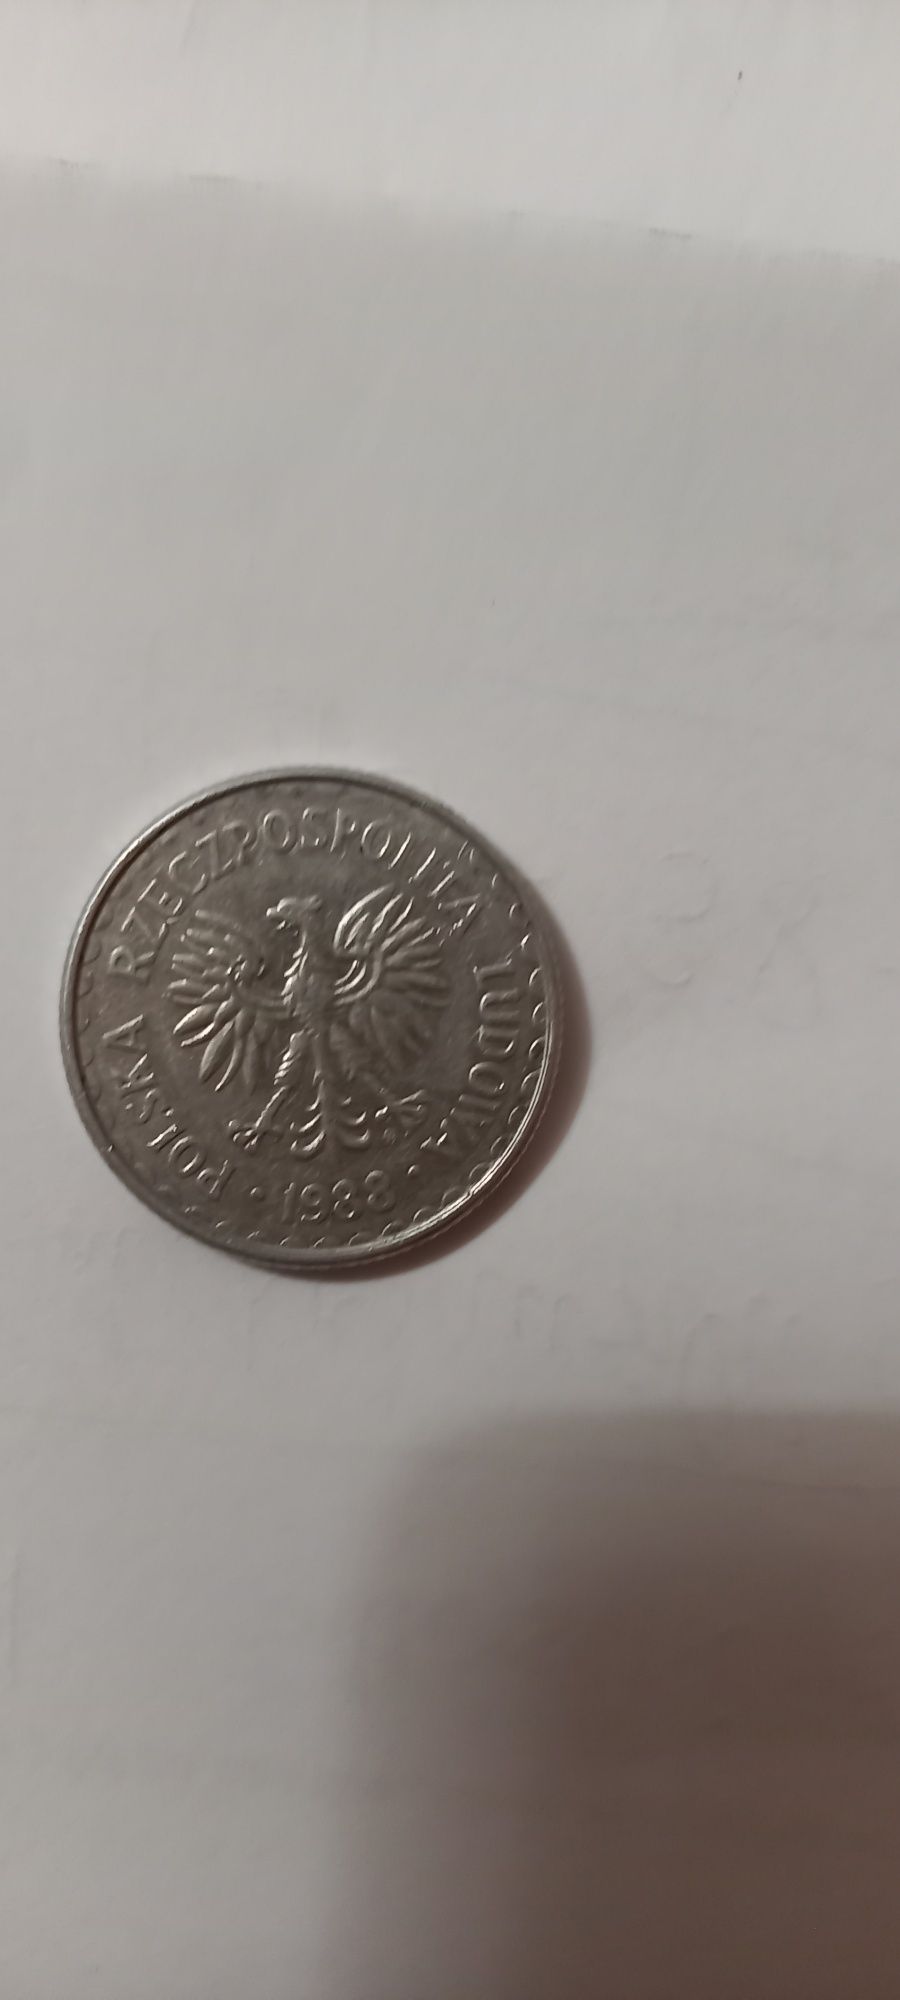 Moneta 1 zł z 1988 r.